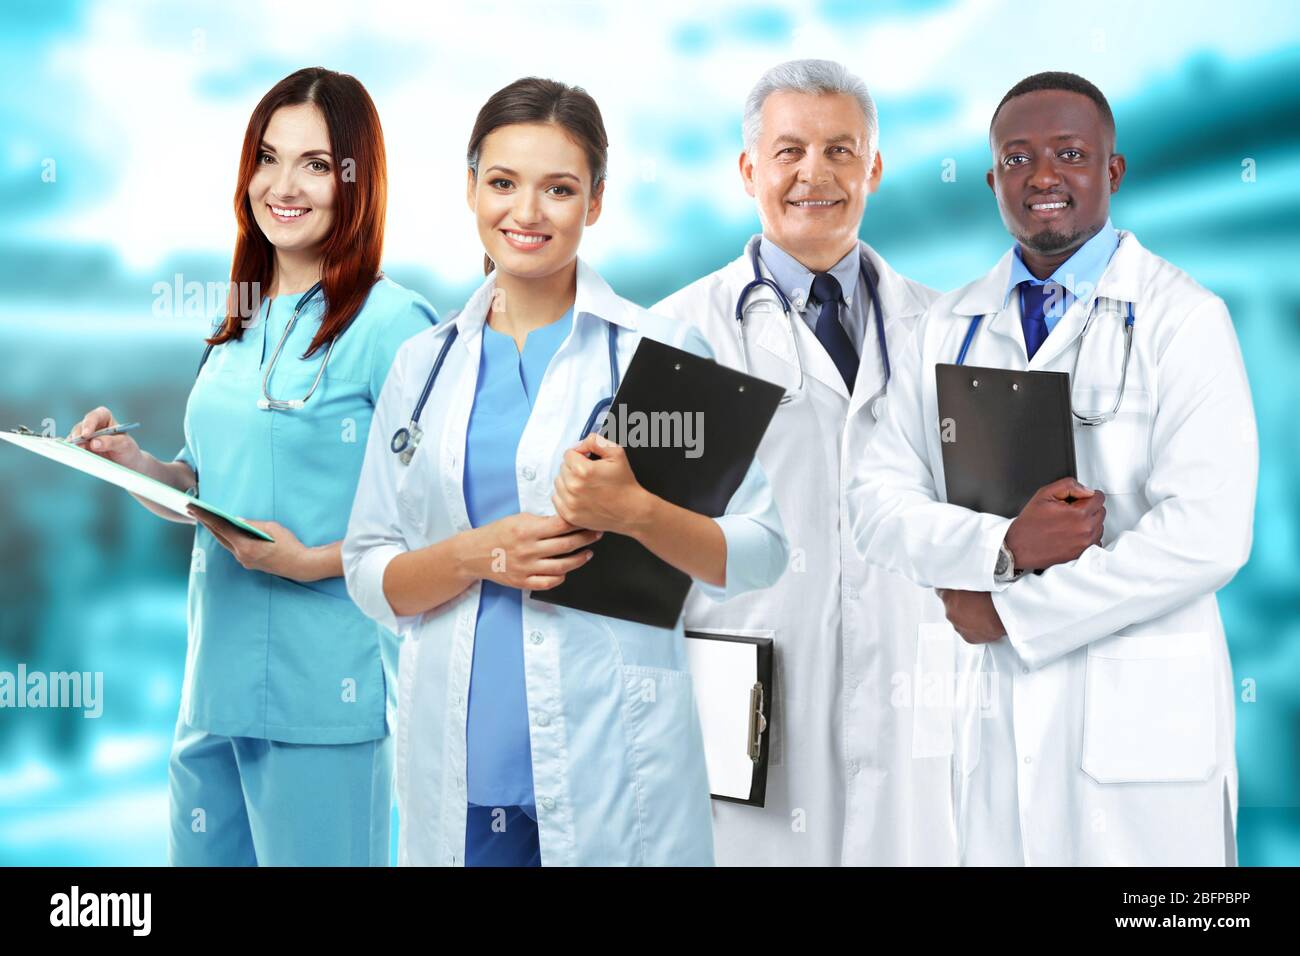 77 fotos de stock e banco de imagens de Medical Team Doctor Leader  Background - Getty Images